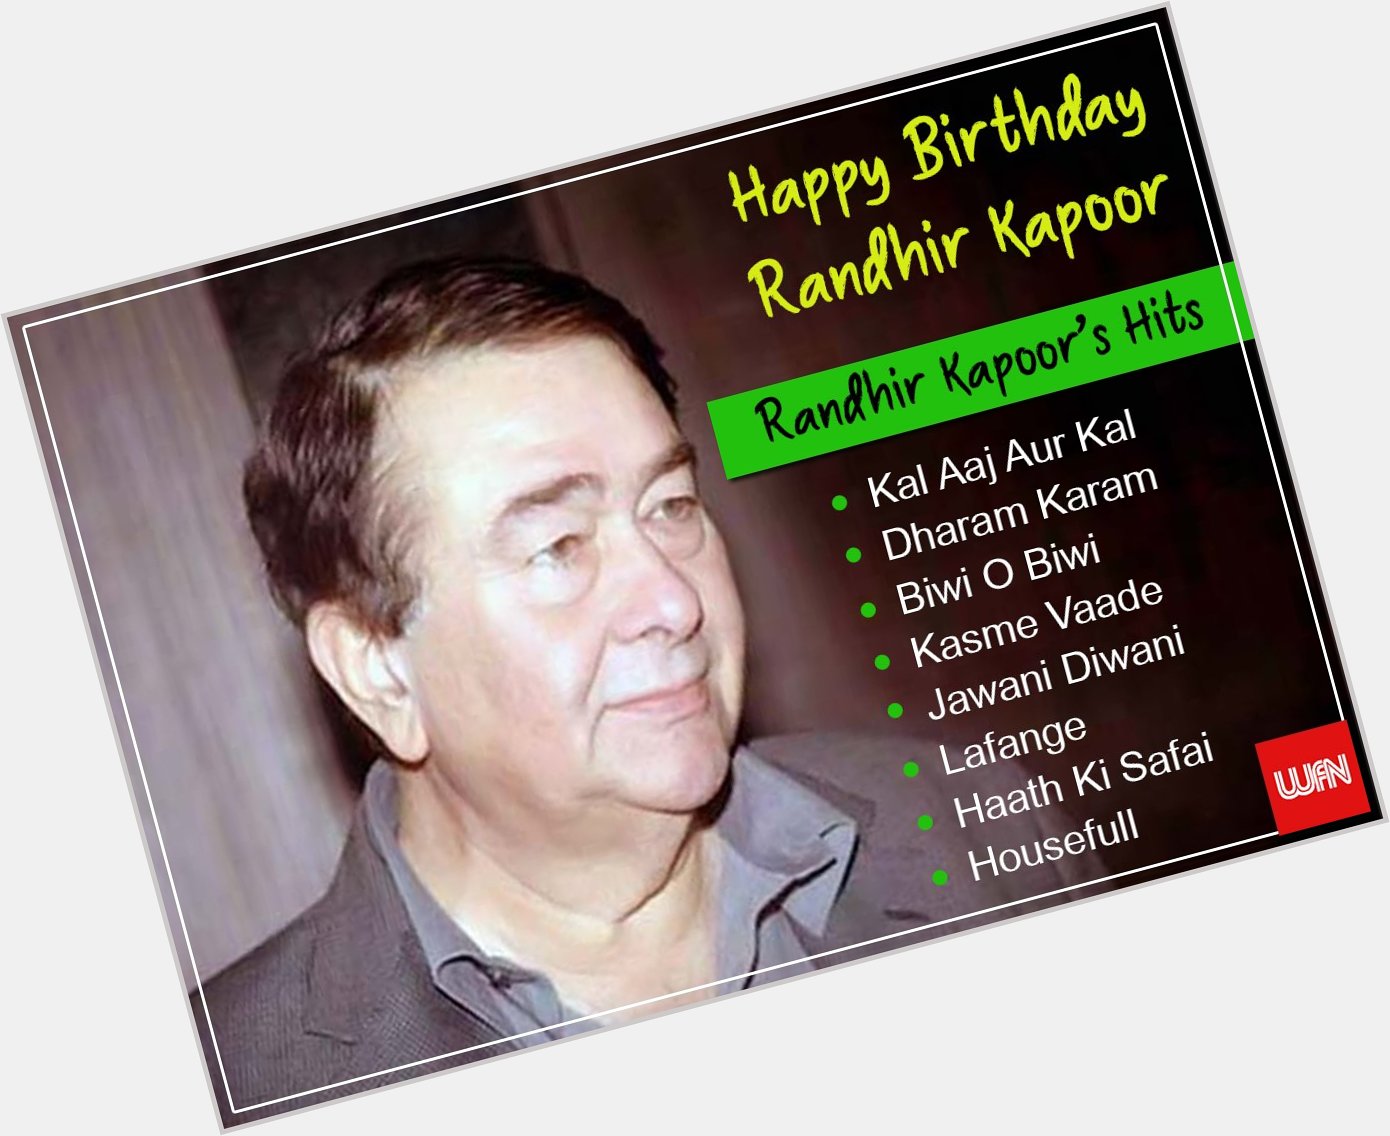 Wish you a very happy birthday Randhir Kapoor  